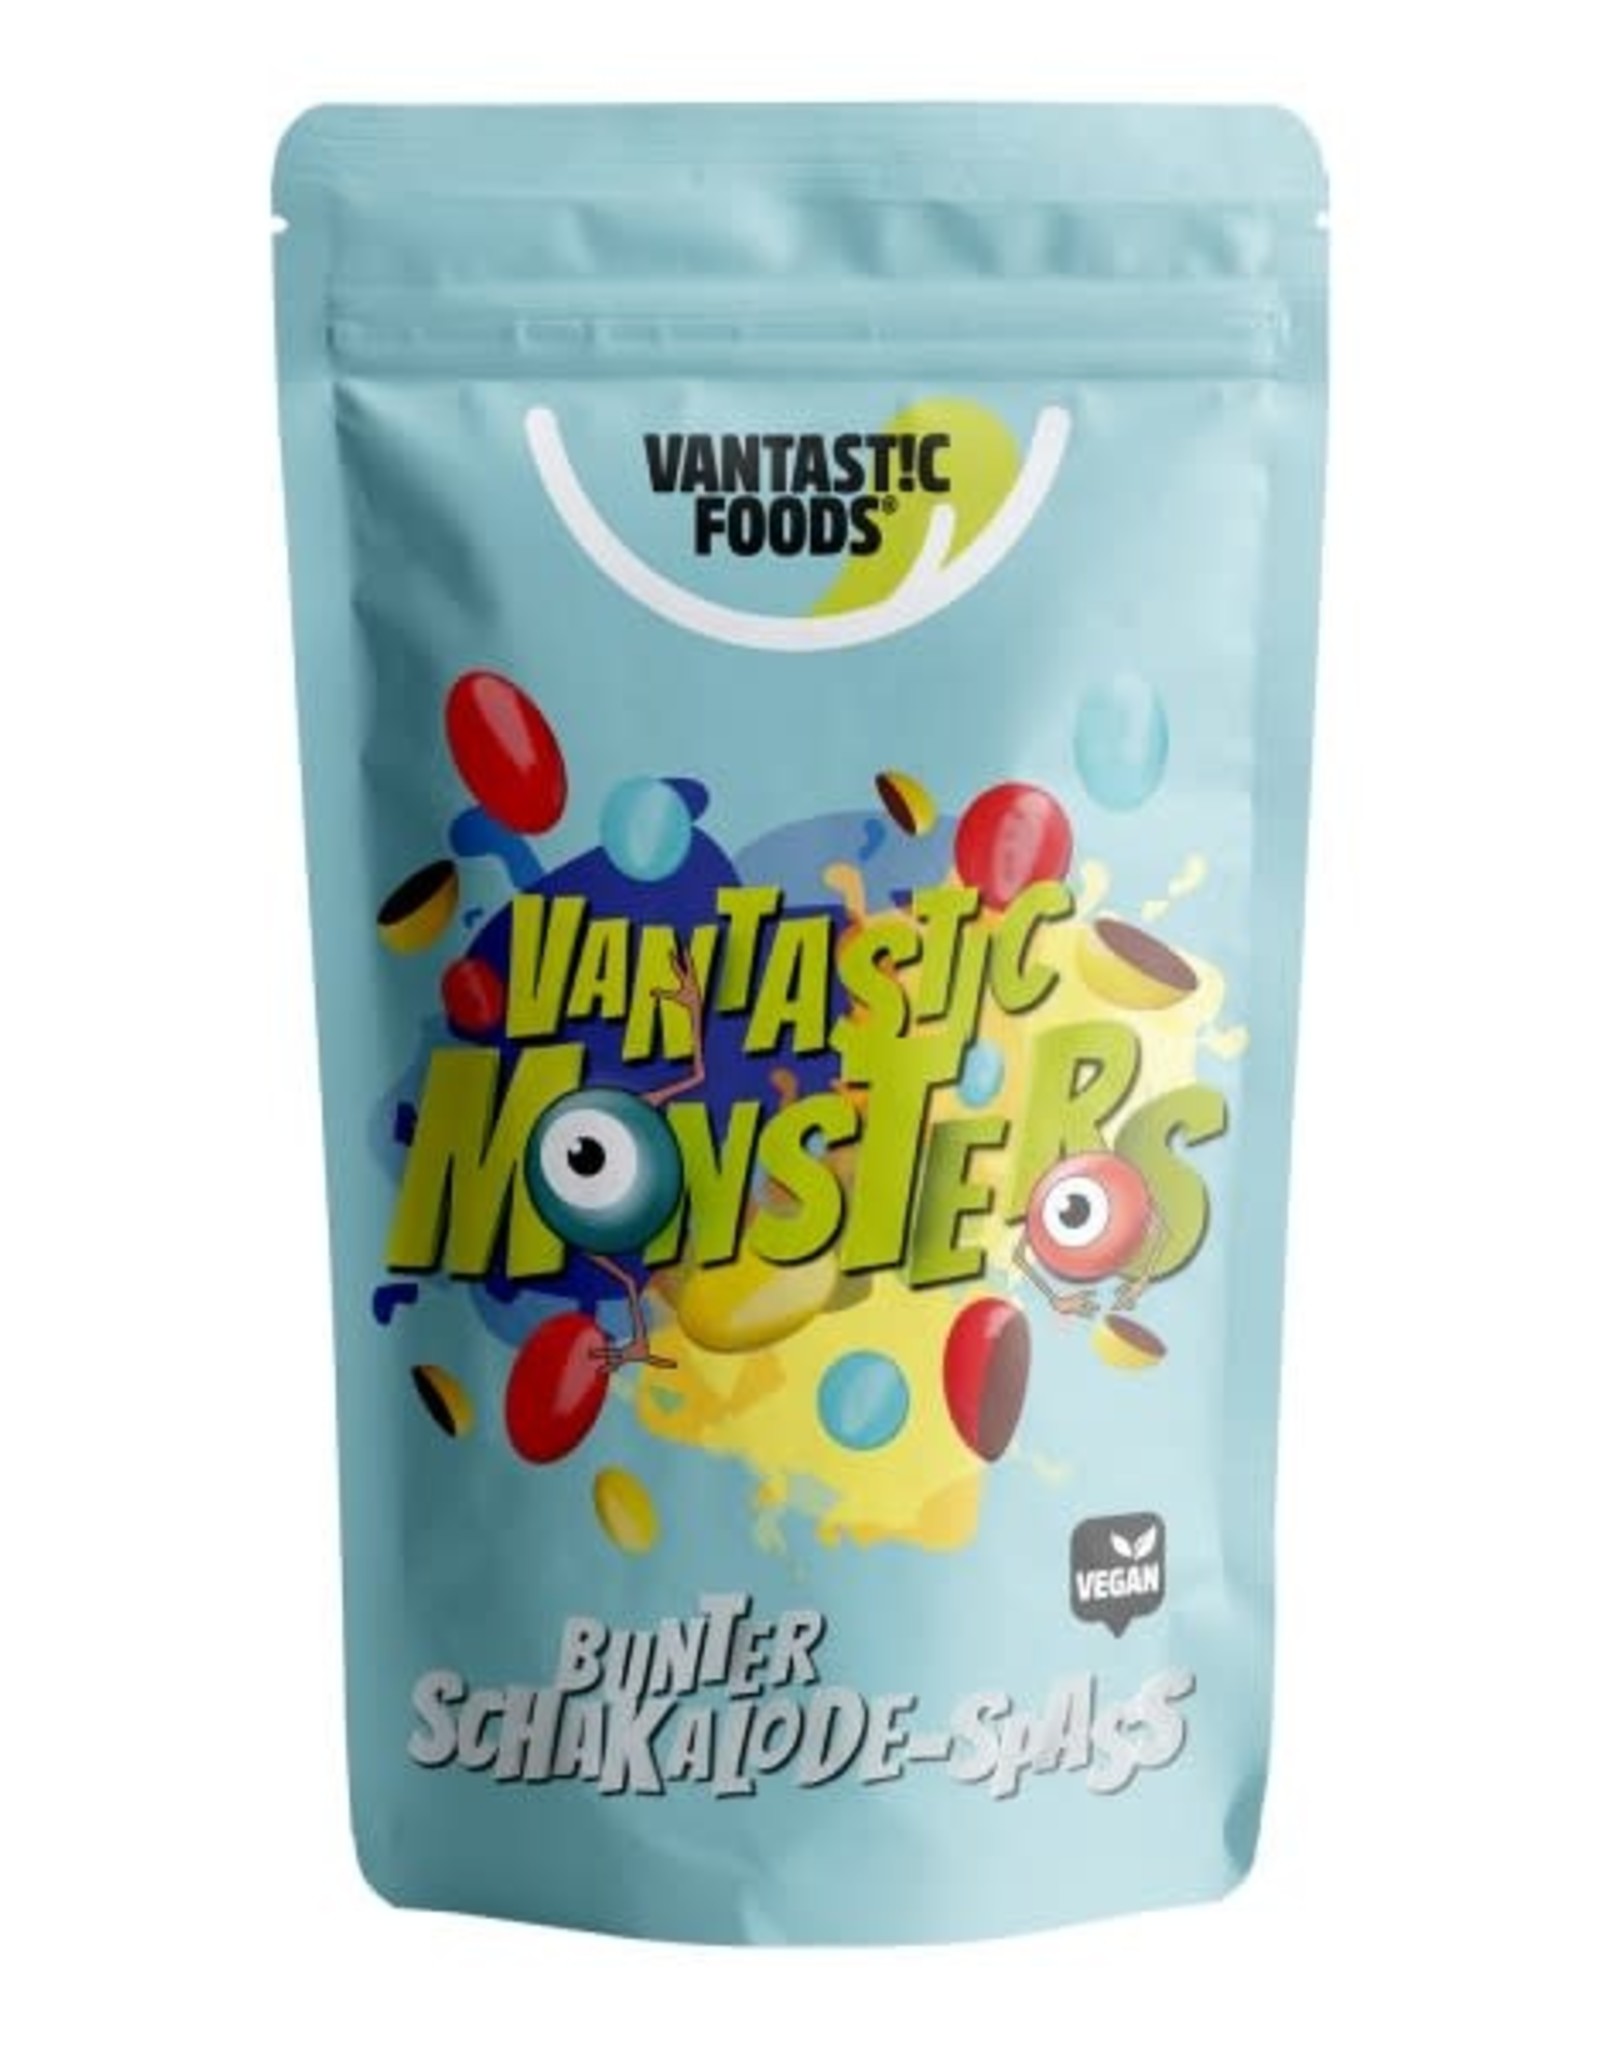 Vantastic foods SCHAKALODE Monsters, 125g